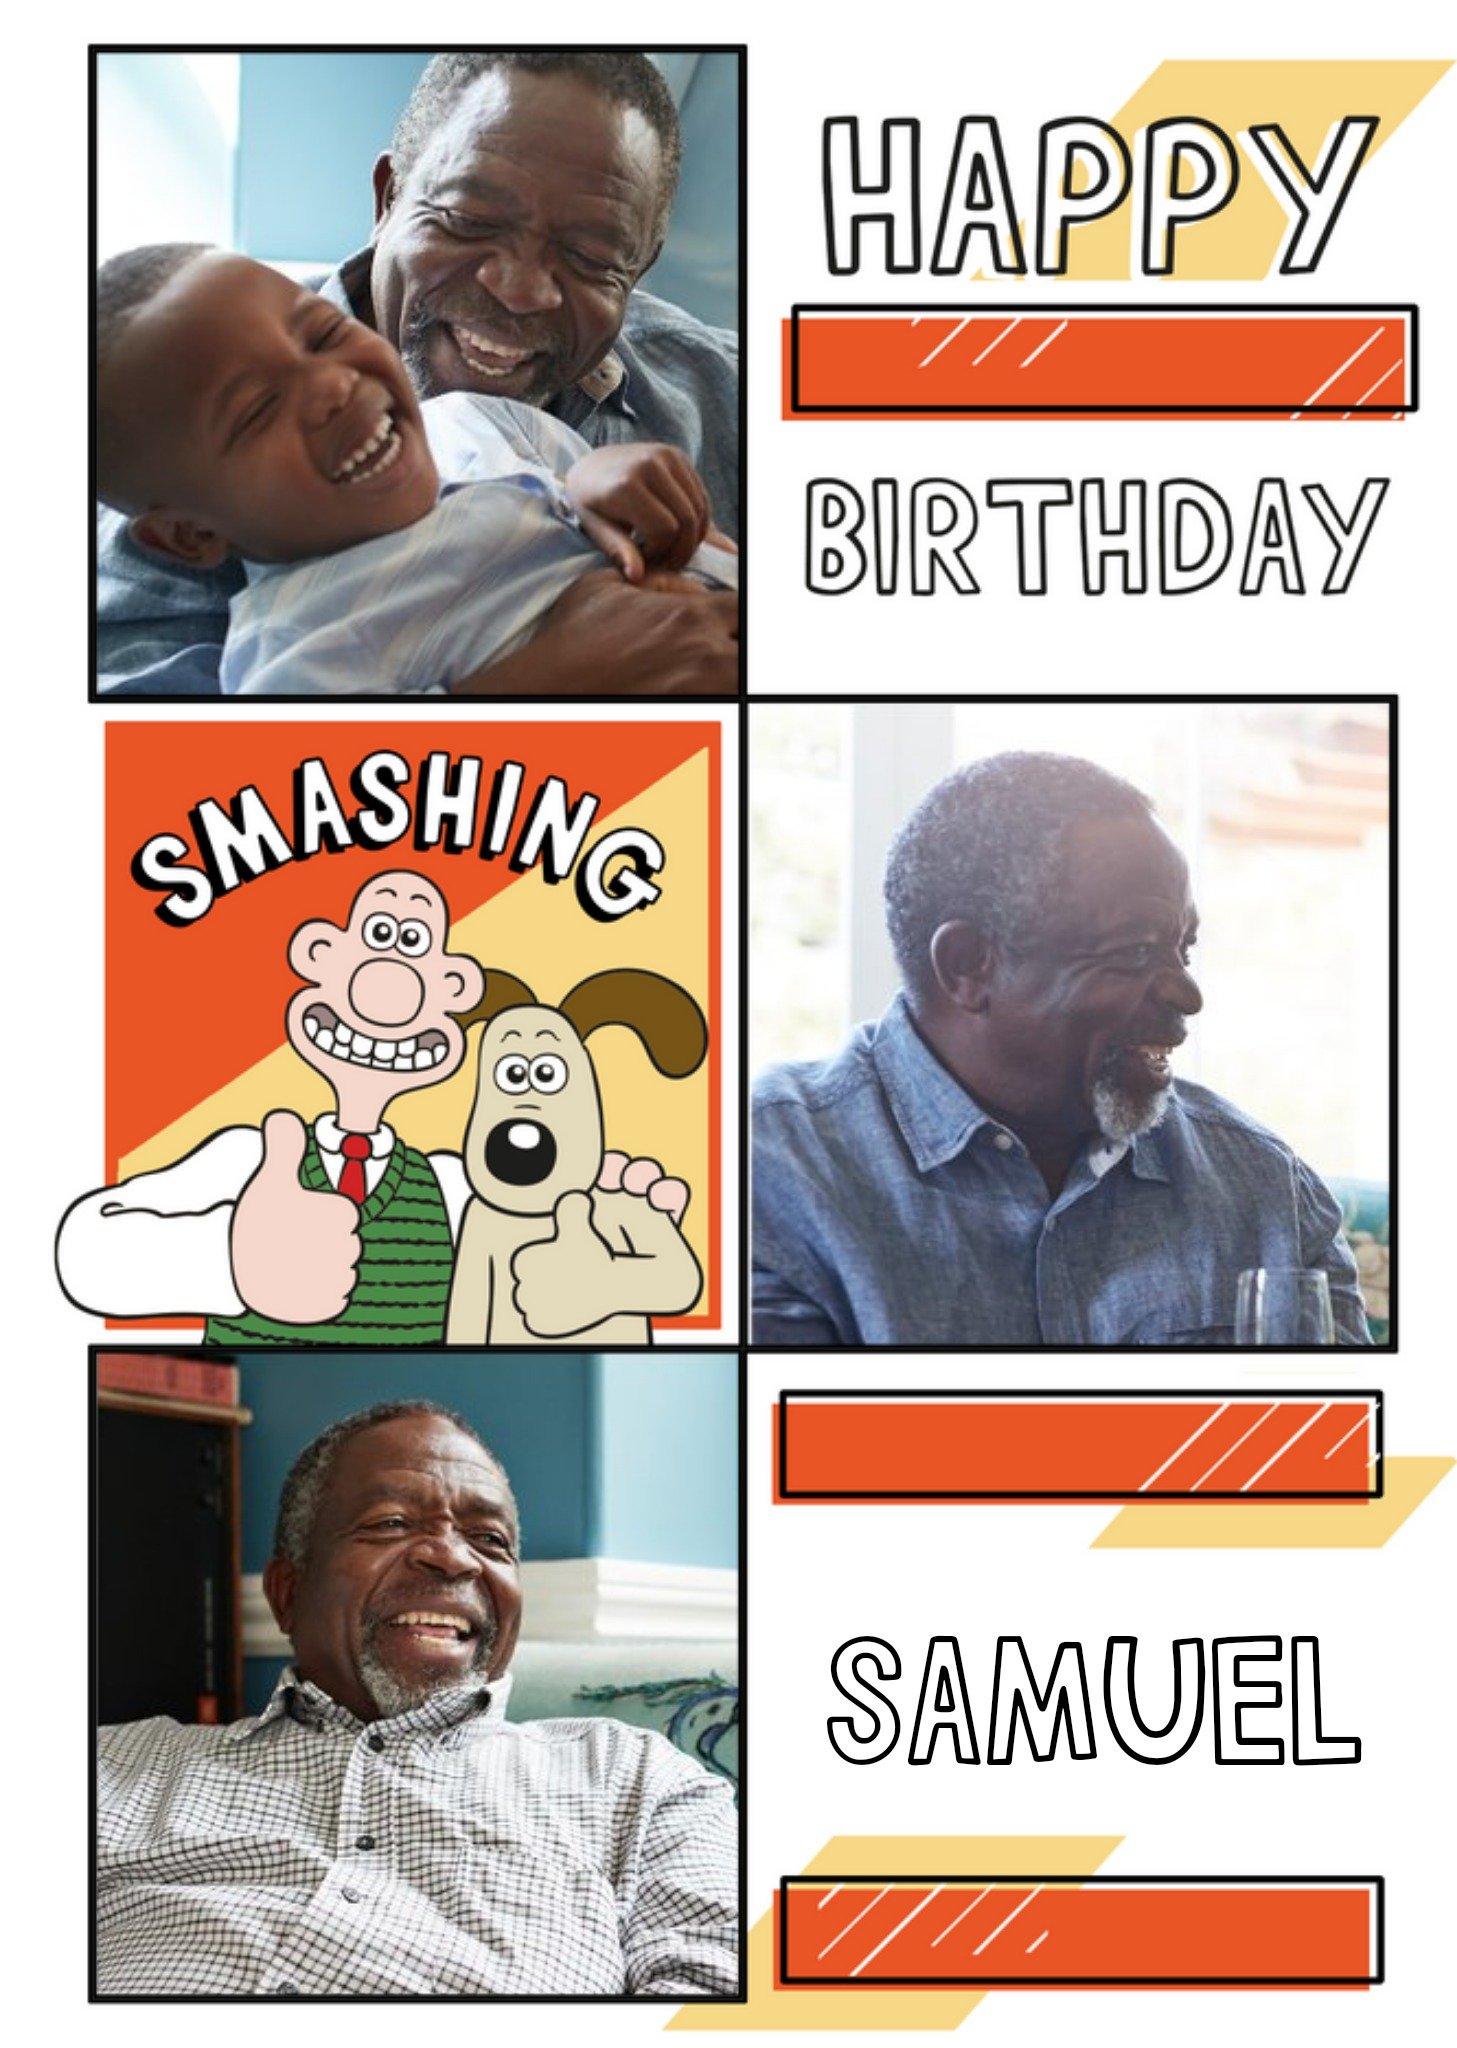 Wallace And Gromit Photo Upload Smashing Birthday Card, Large